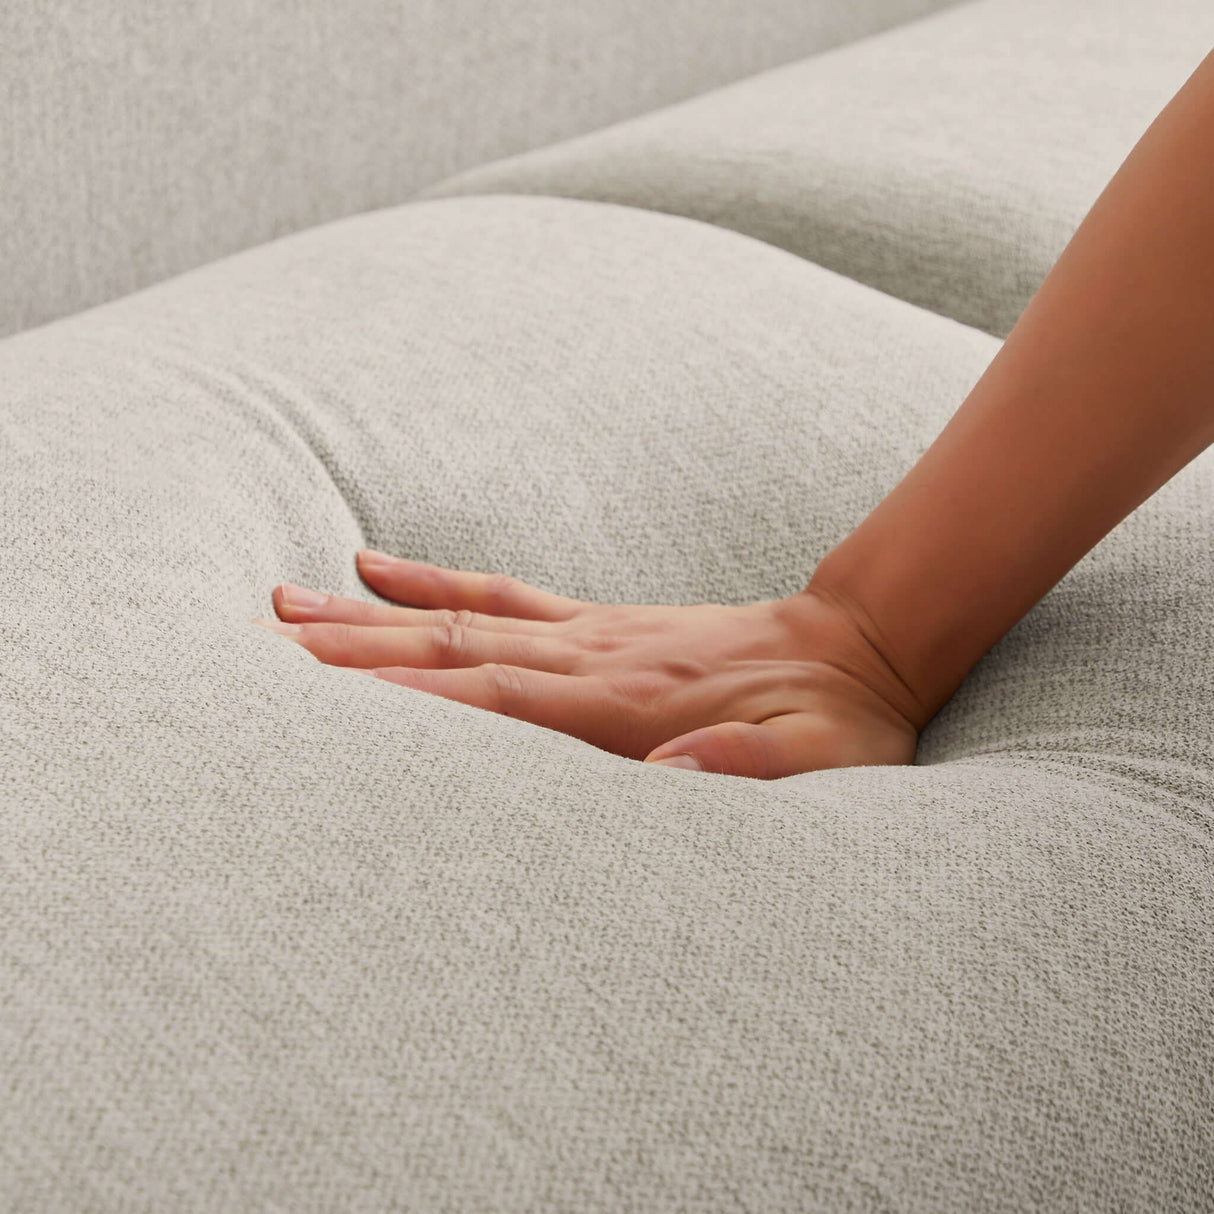 Larisa Mid Century Modern Linen Sofa Mocha